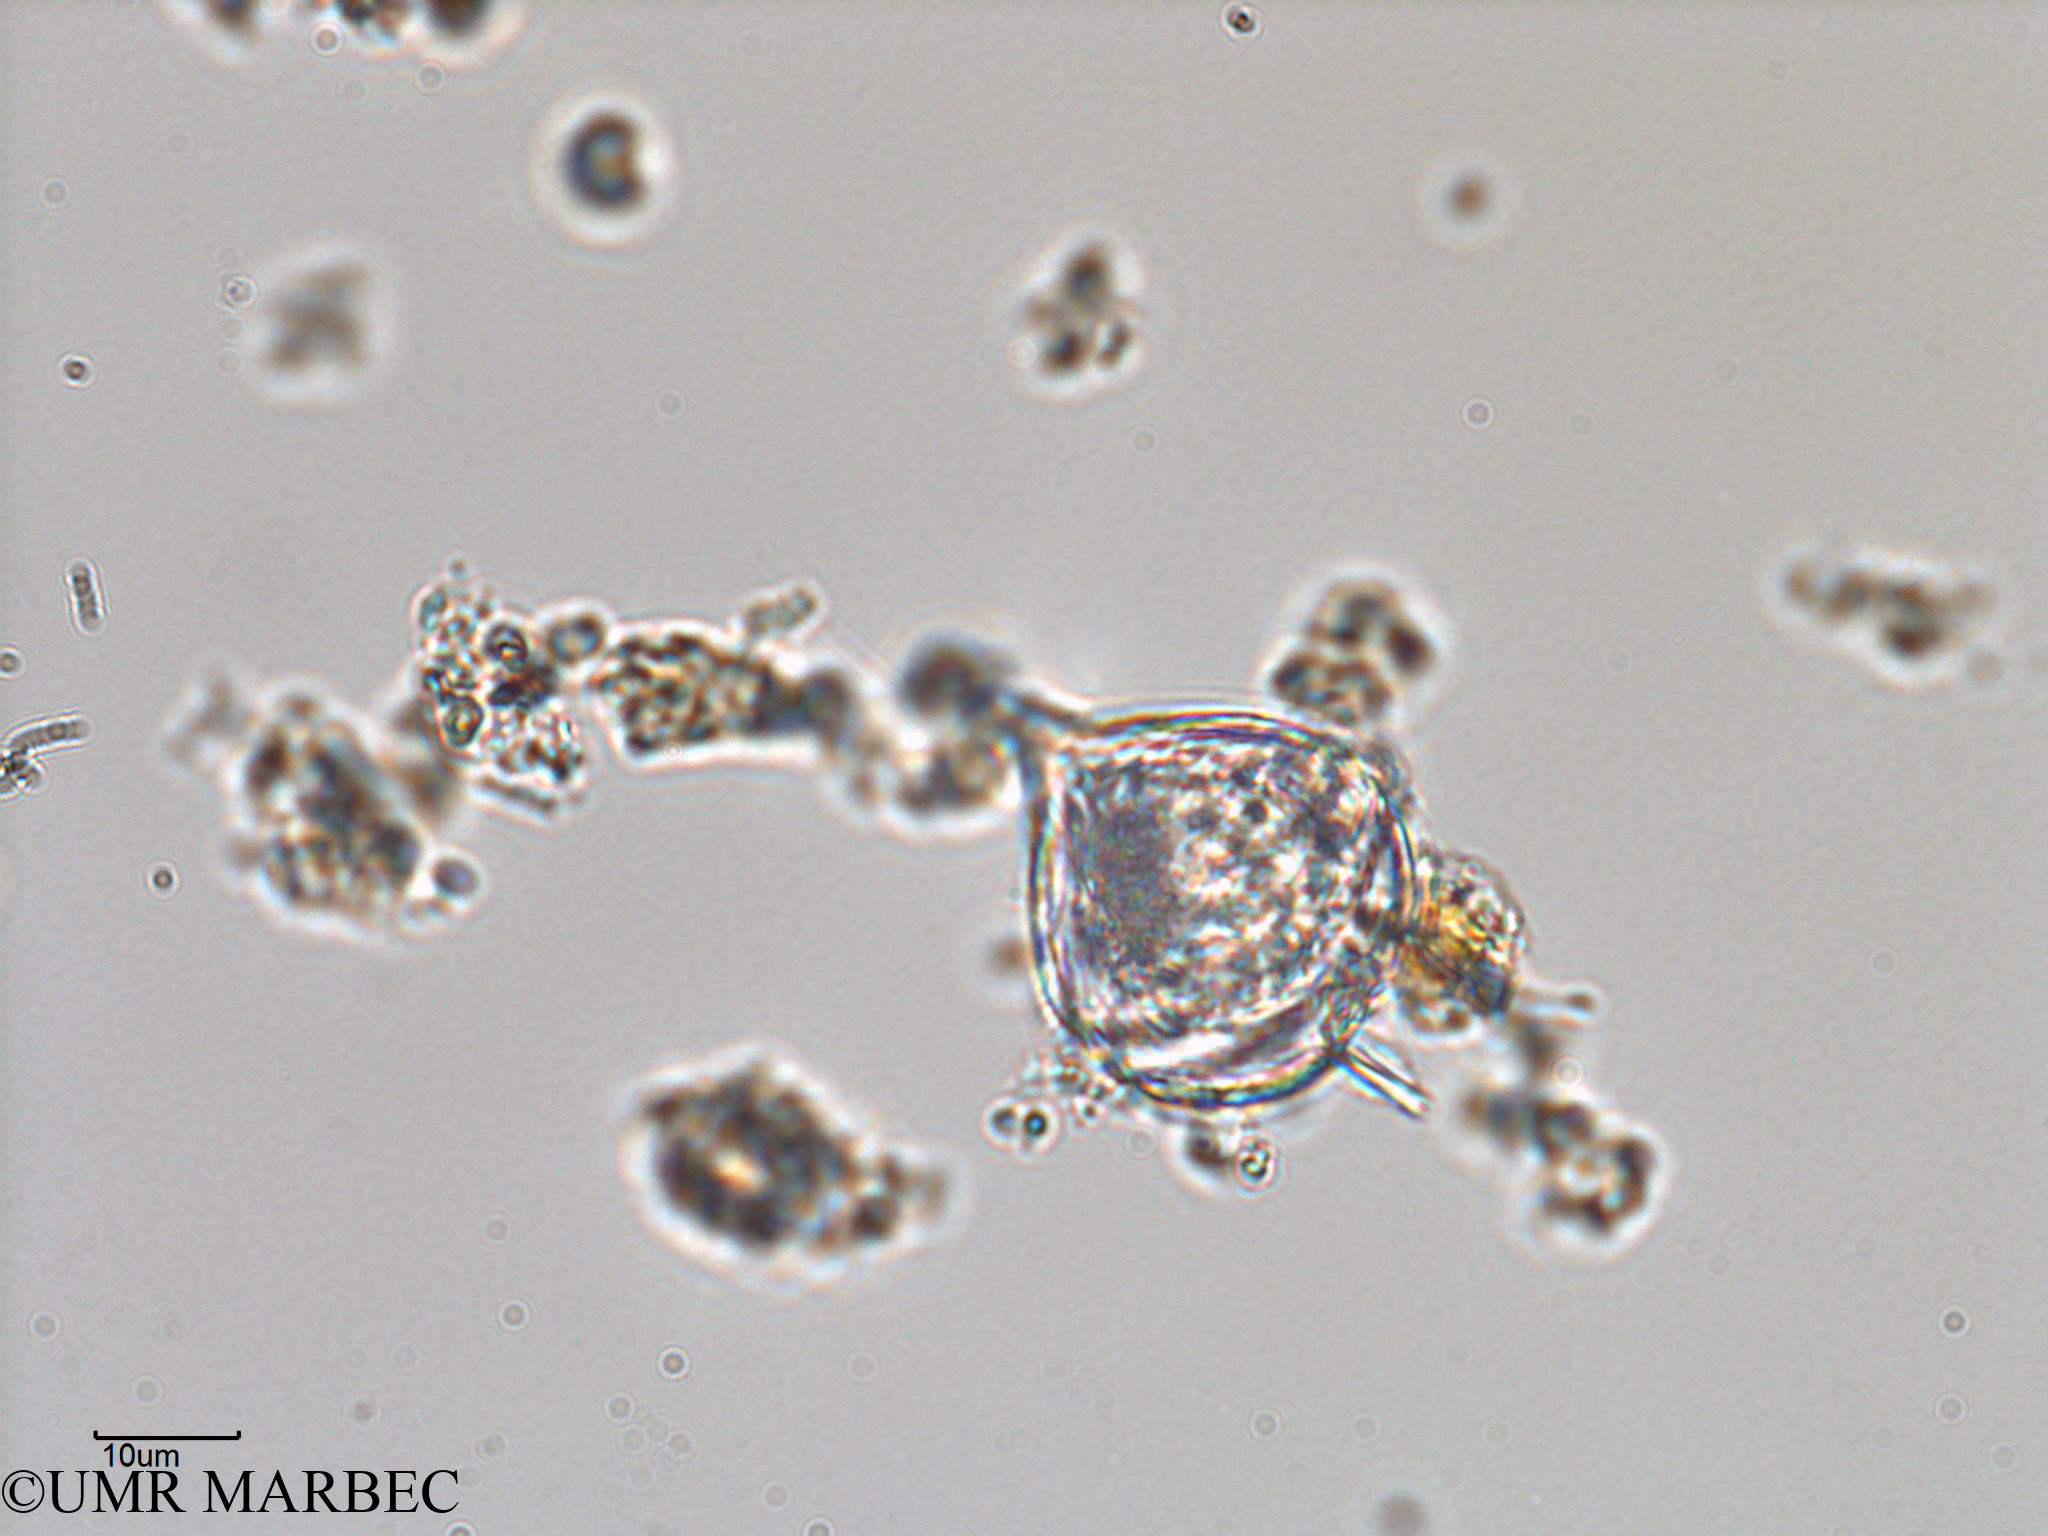 phyto/Bizerte/bizerte_lagoon/RISCO February 2015/Protoperidinium sp31 (ancien Lagune_T1-C-Protoperidinium sp31 -9).tif(copy).jpg